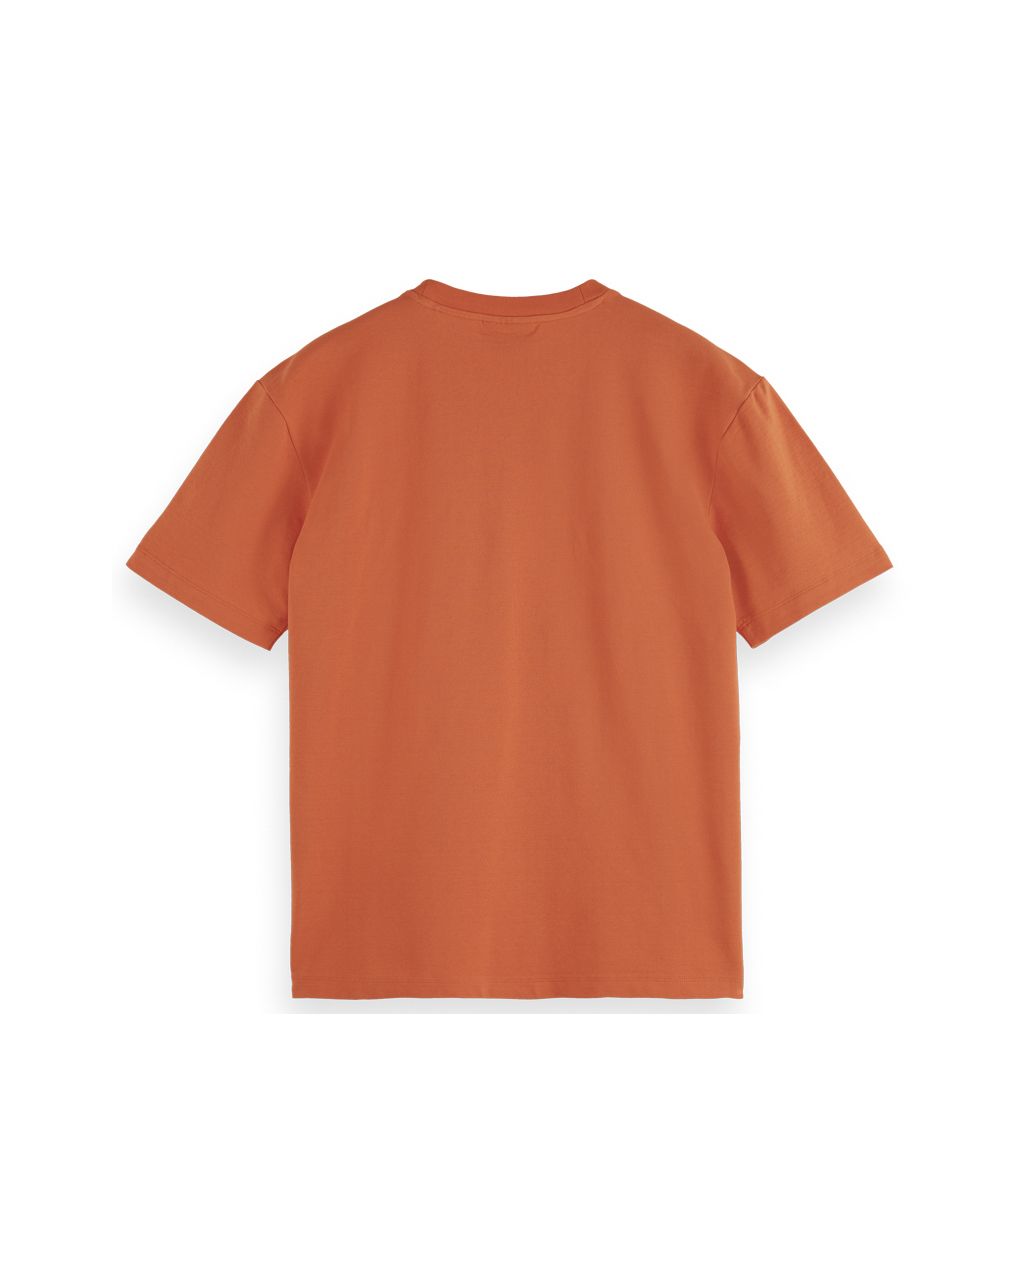 Scotch & Soda T-shirt KM Oranje 069905-001-L